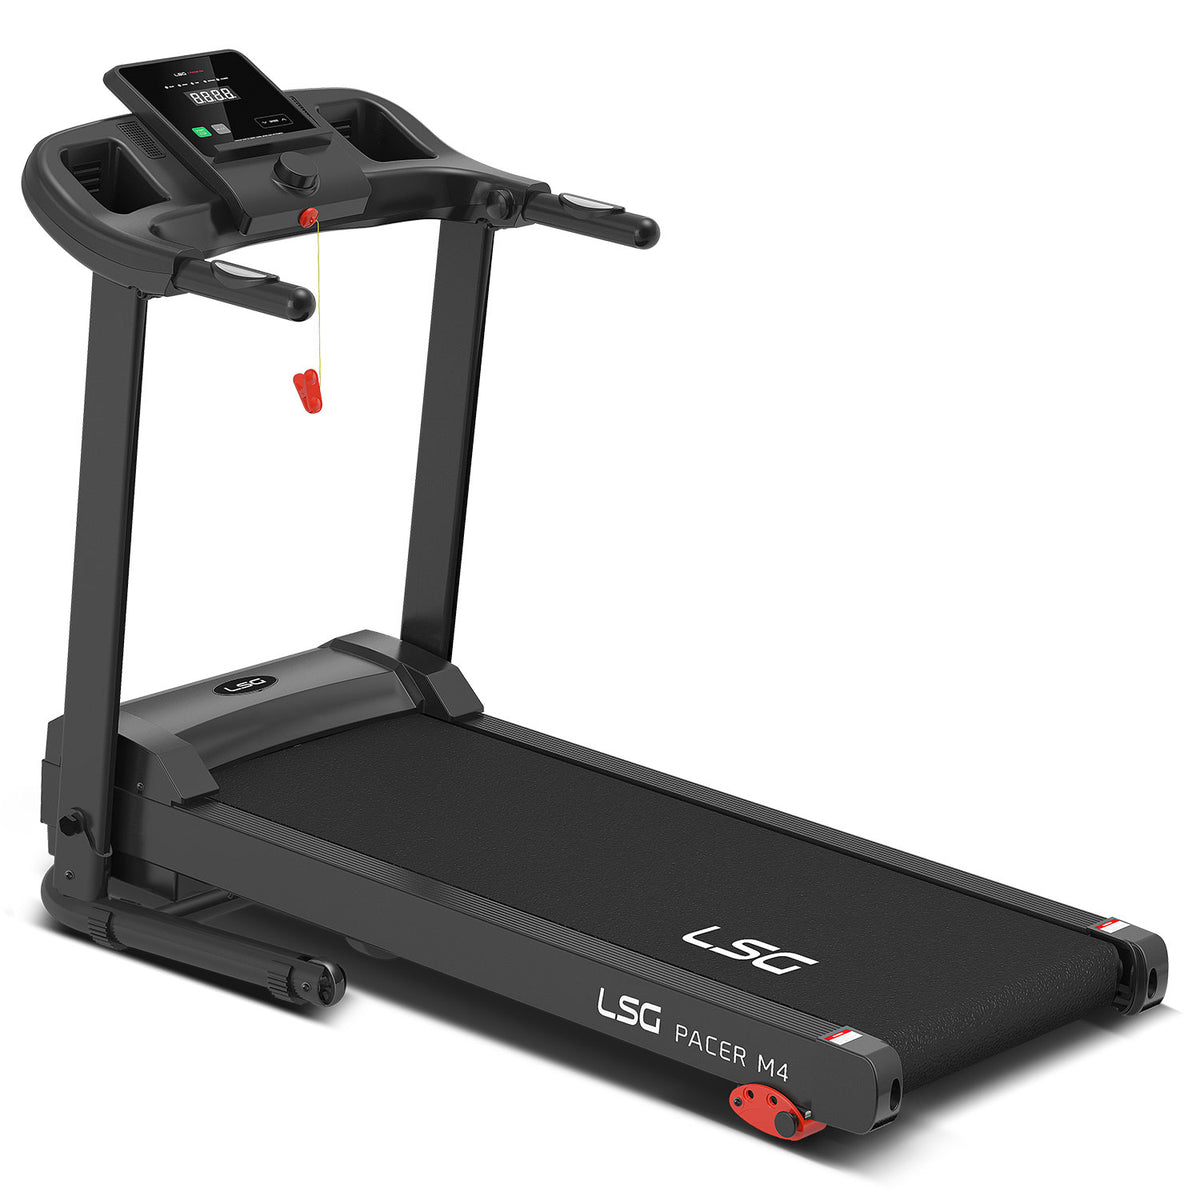 LSG PACER M4 Treadmill